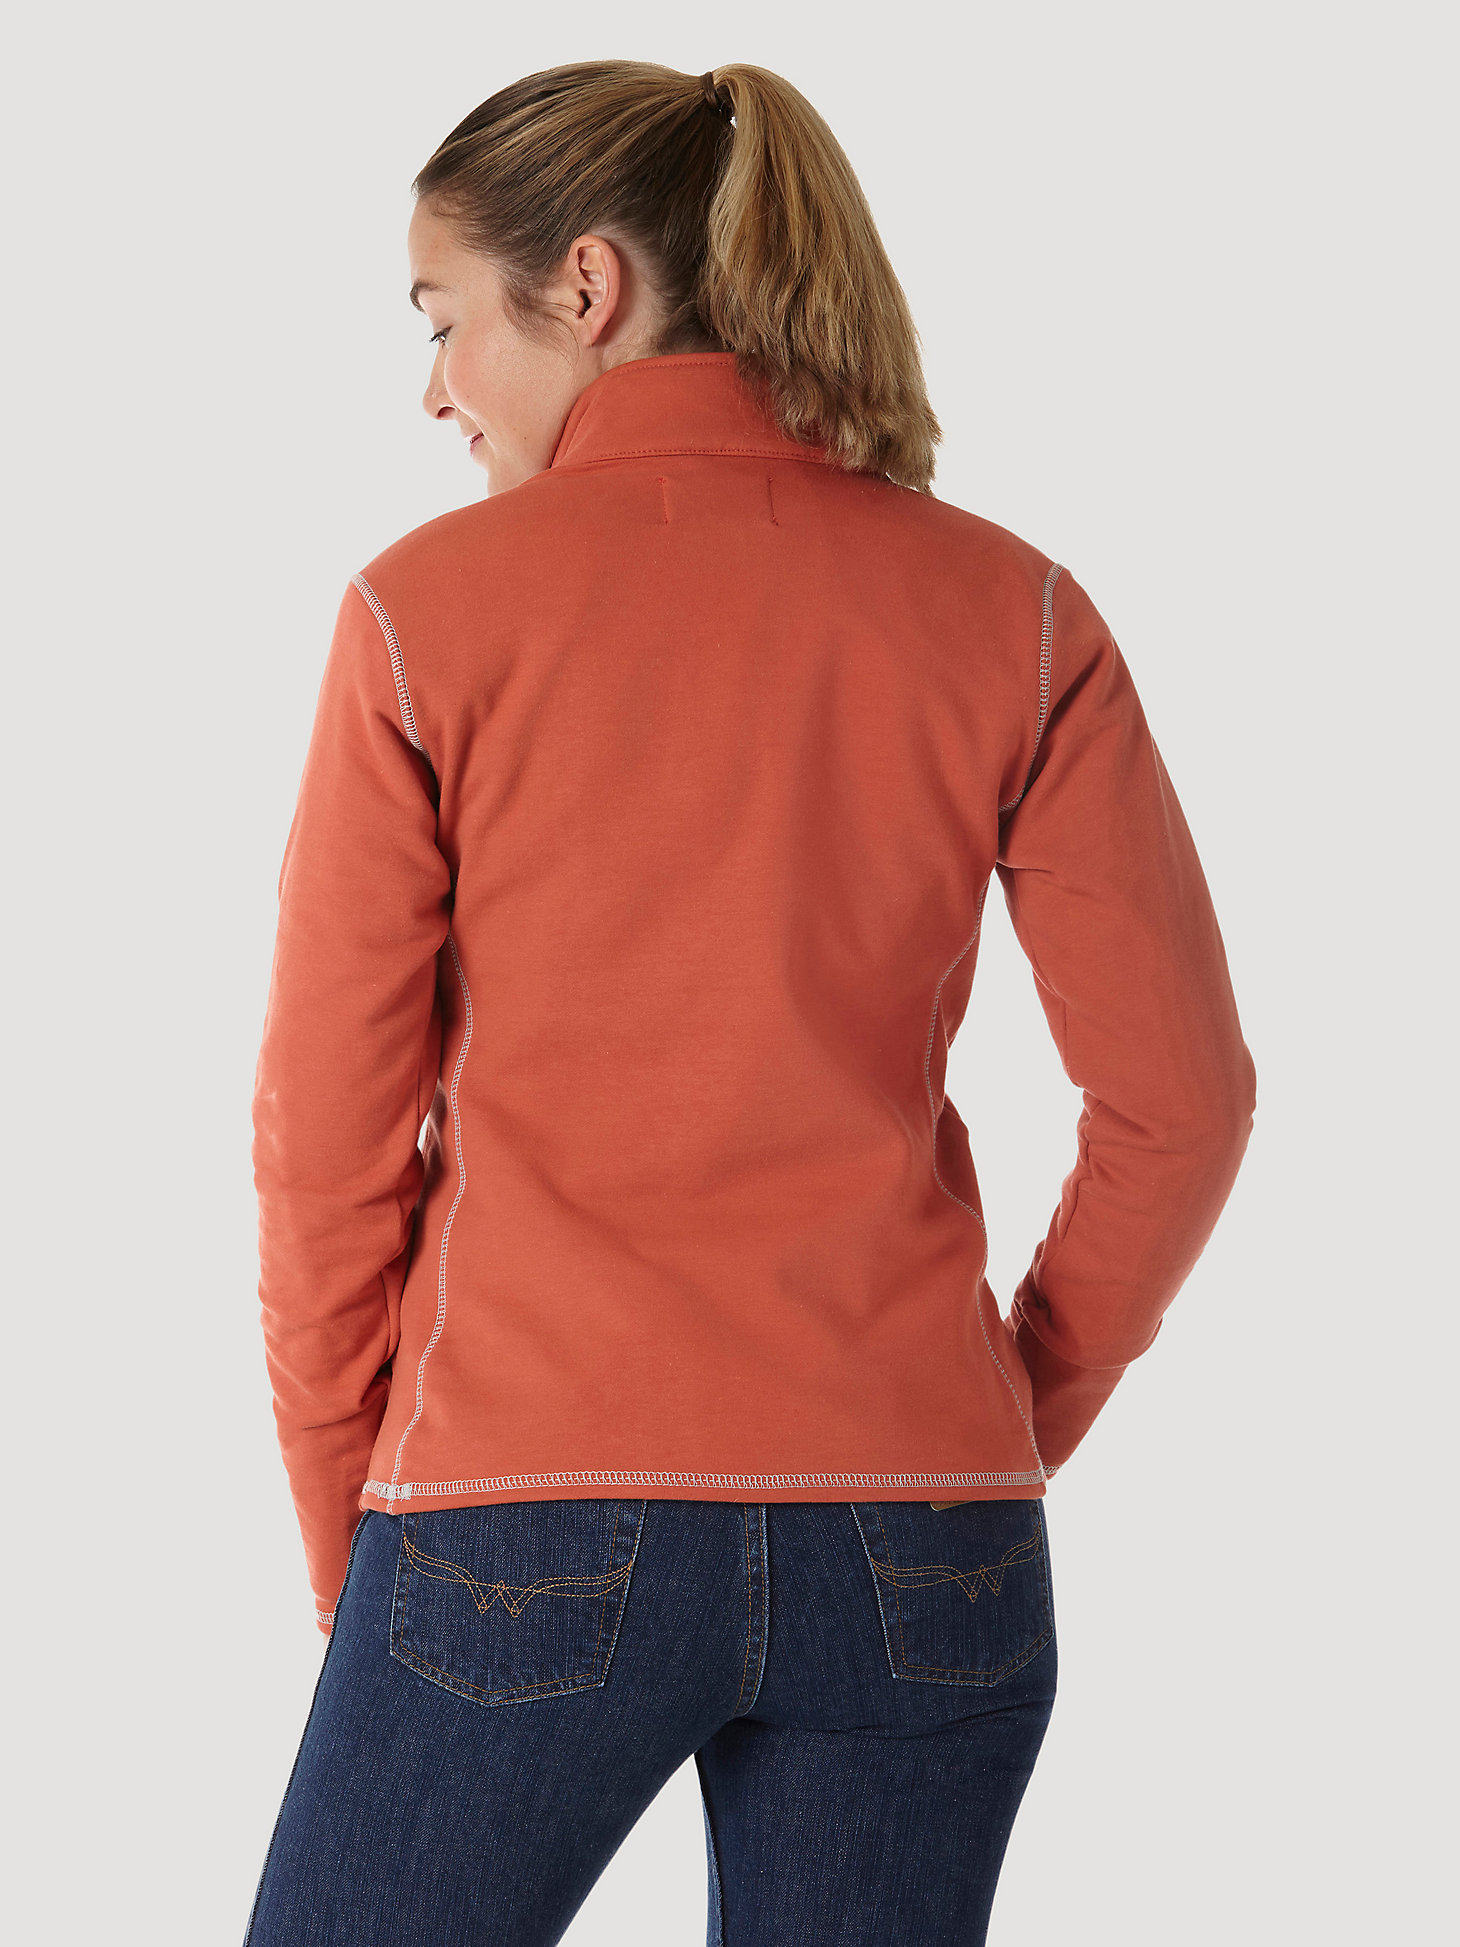 Women's Wrangler® Flame Resistant Long Sleeve Quarter-Zip Pullover in Hot Sauce alternative view 3